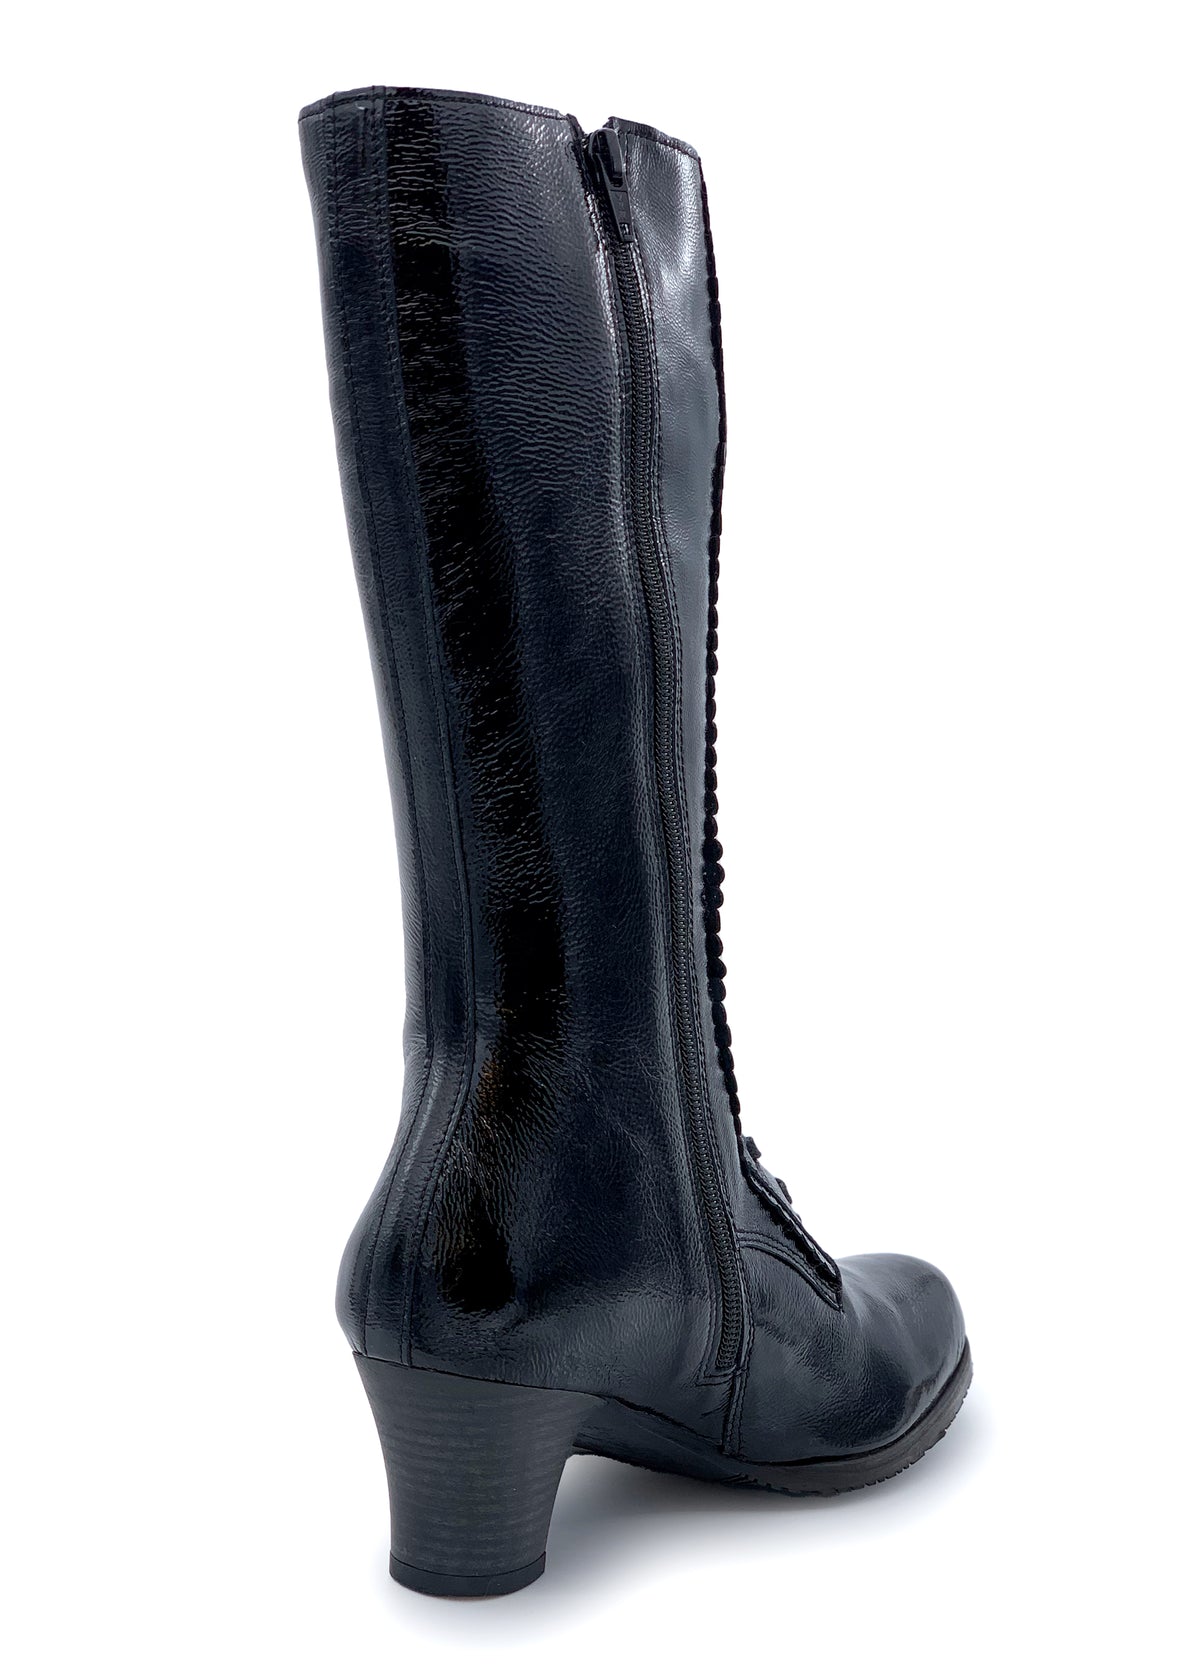 Heeled boots - Linnea, black patent leather